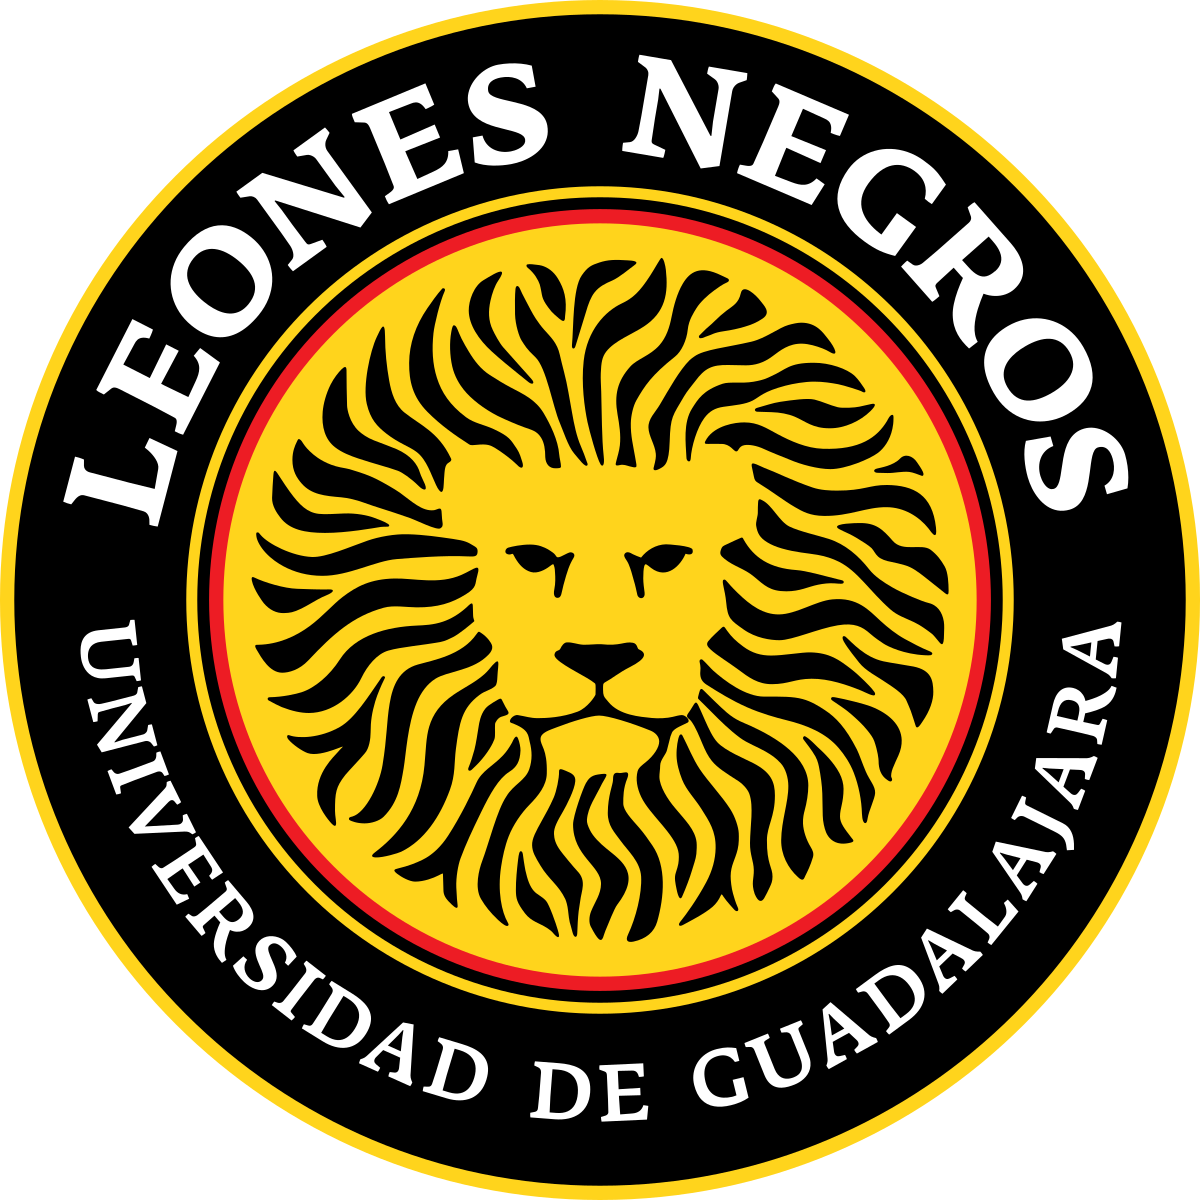 Leones Negros-2 logo